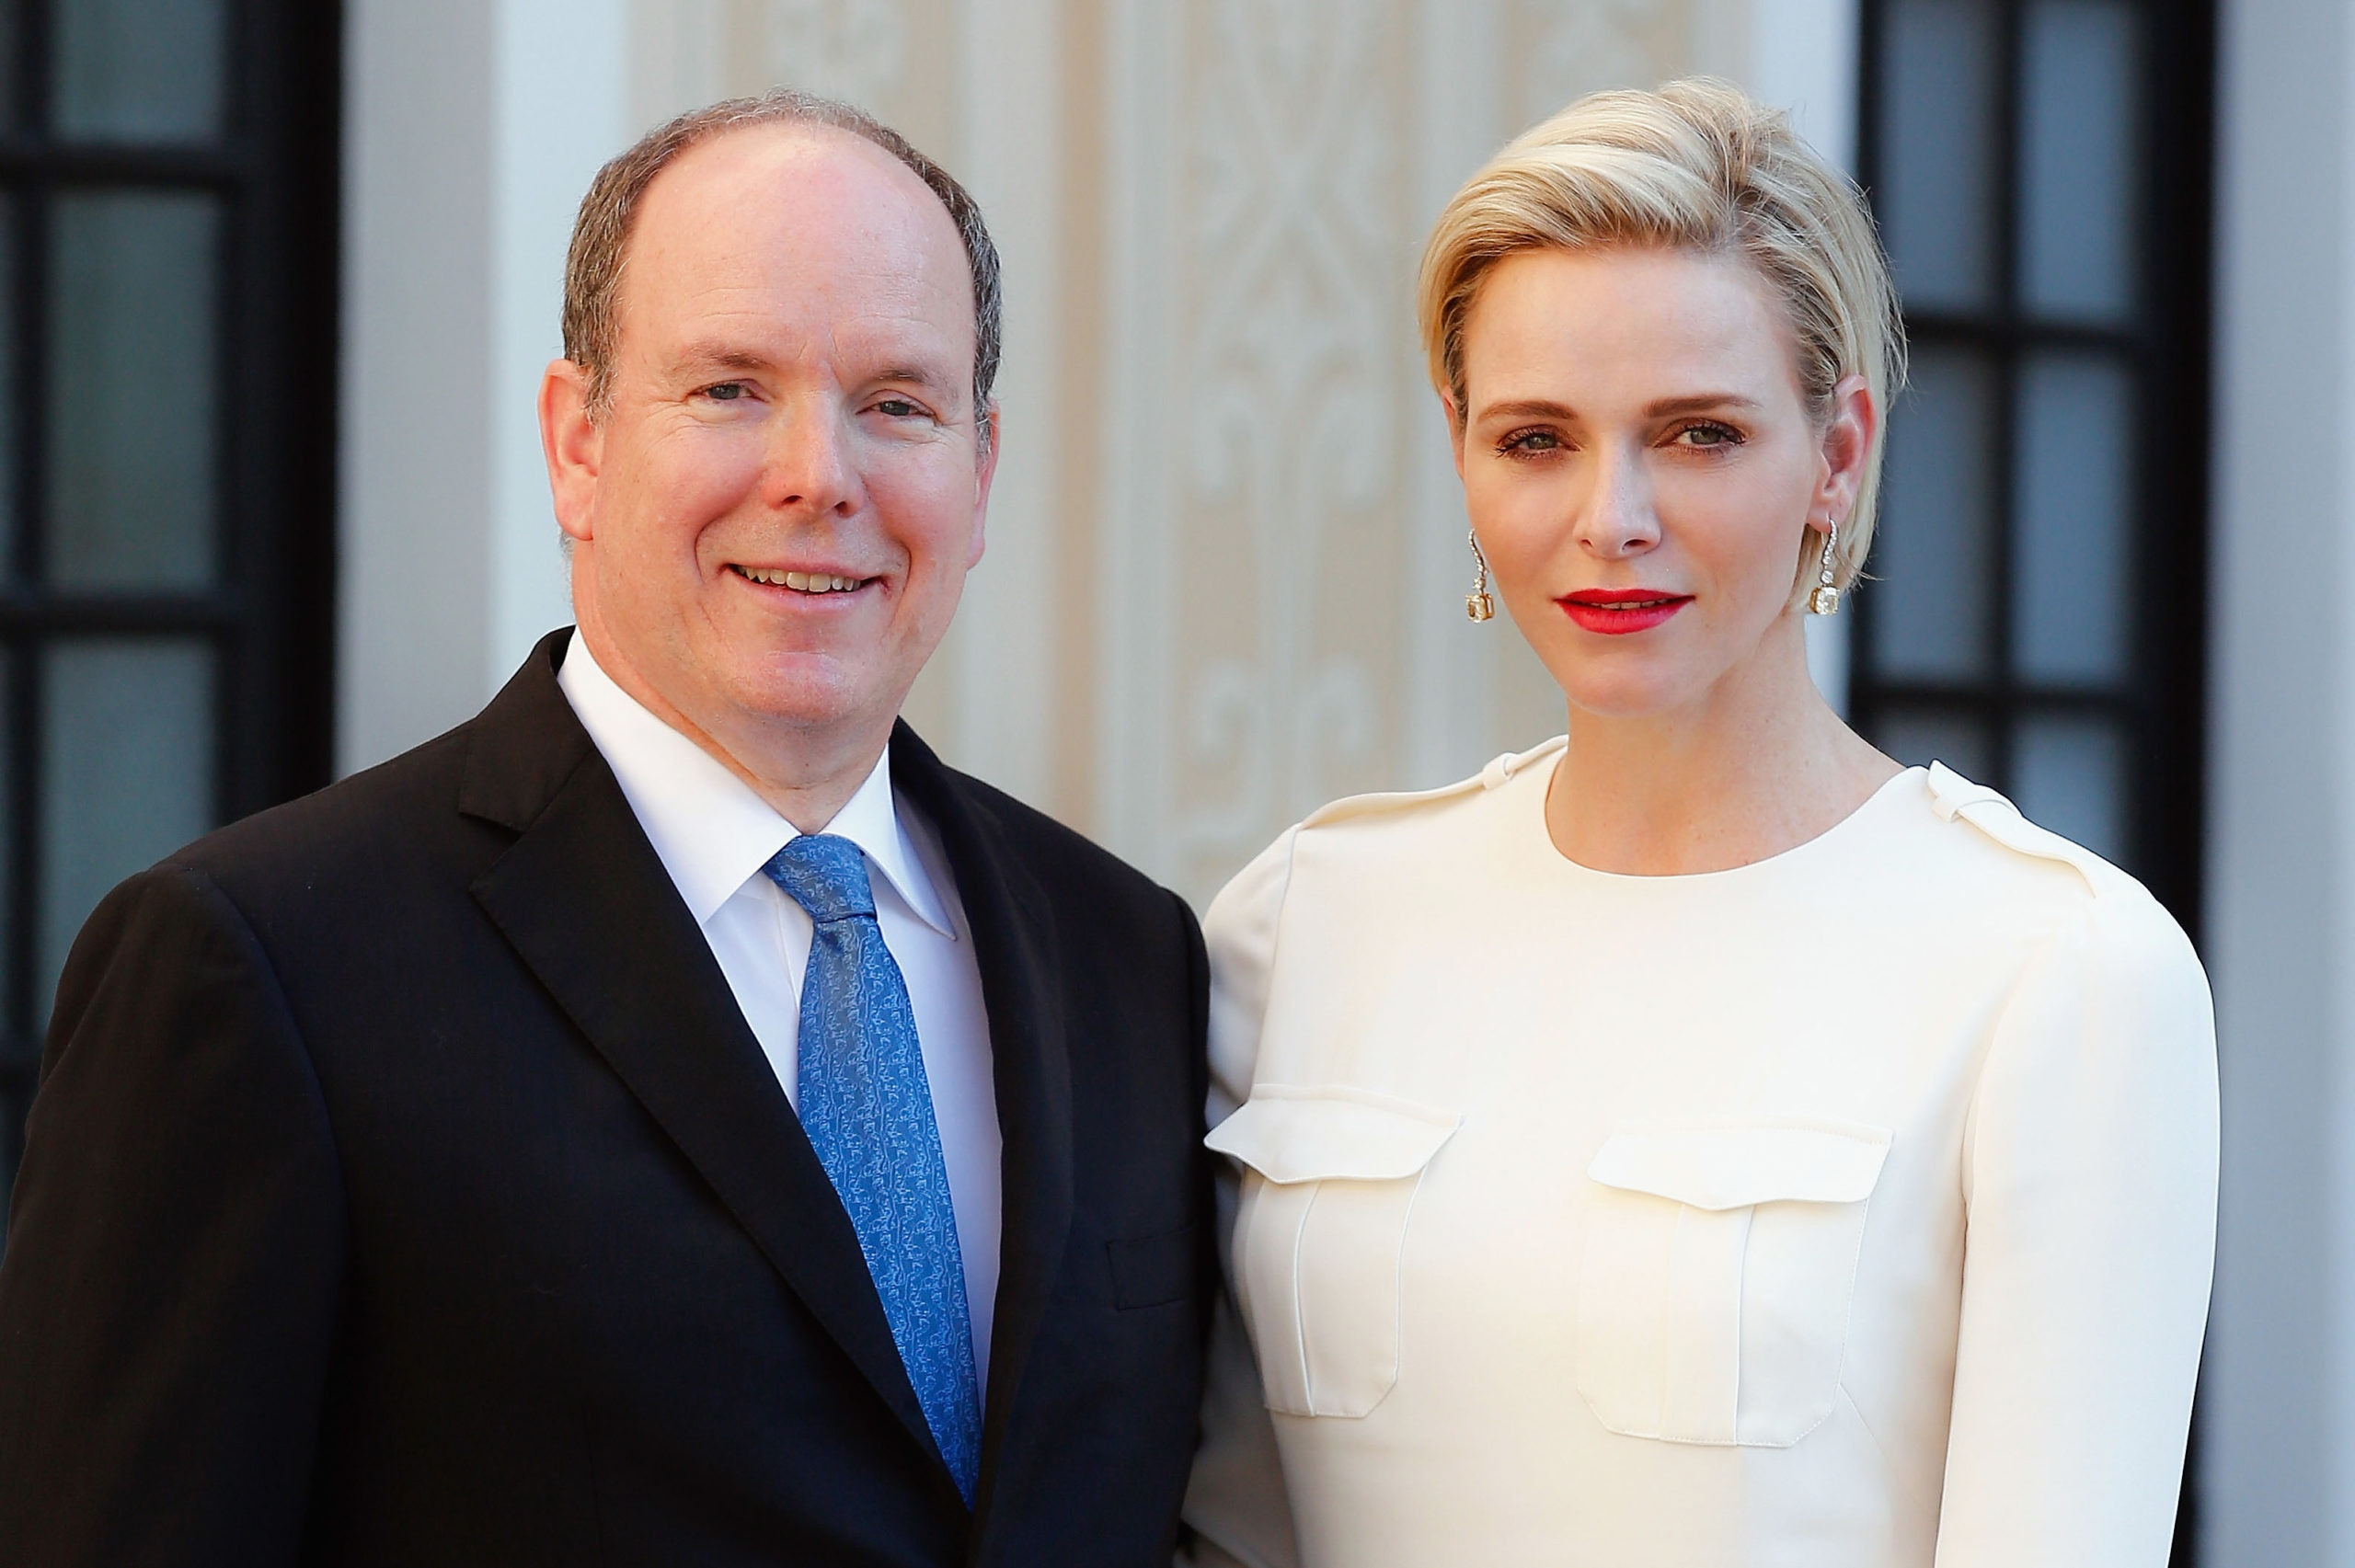 Monaco Princess Charlene And prince Albert Split Demanding Her $500M In Divorce?